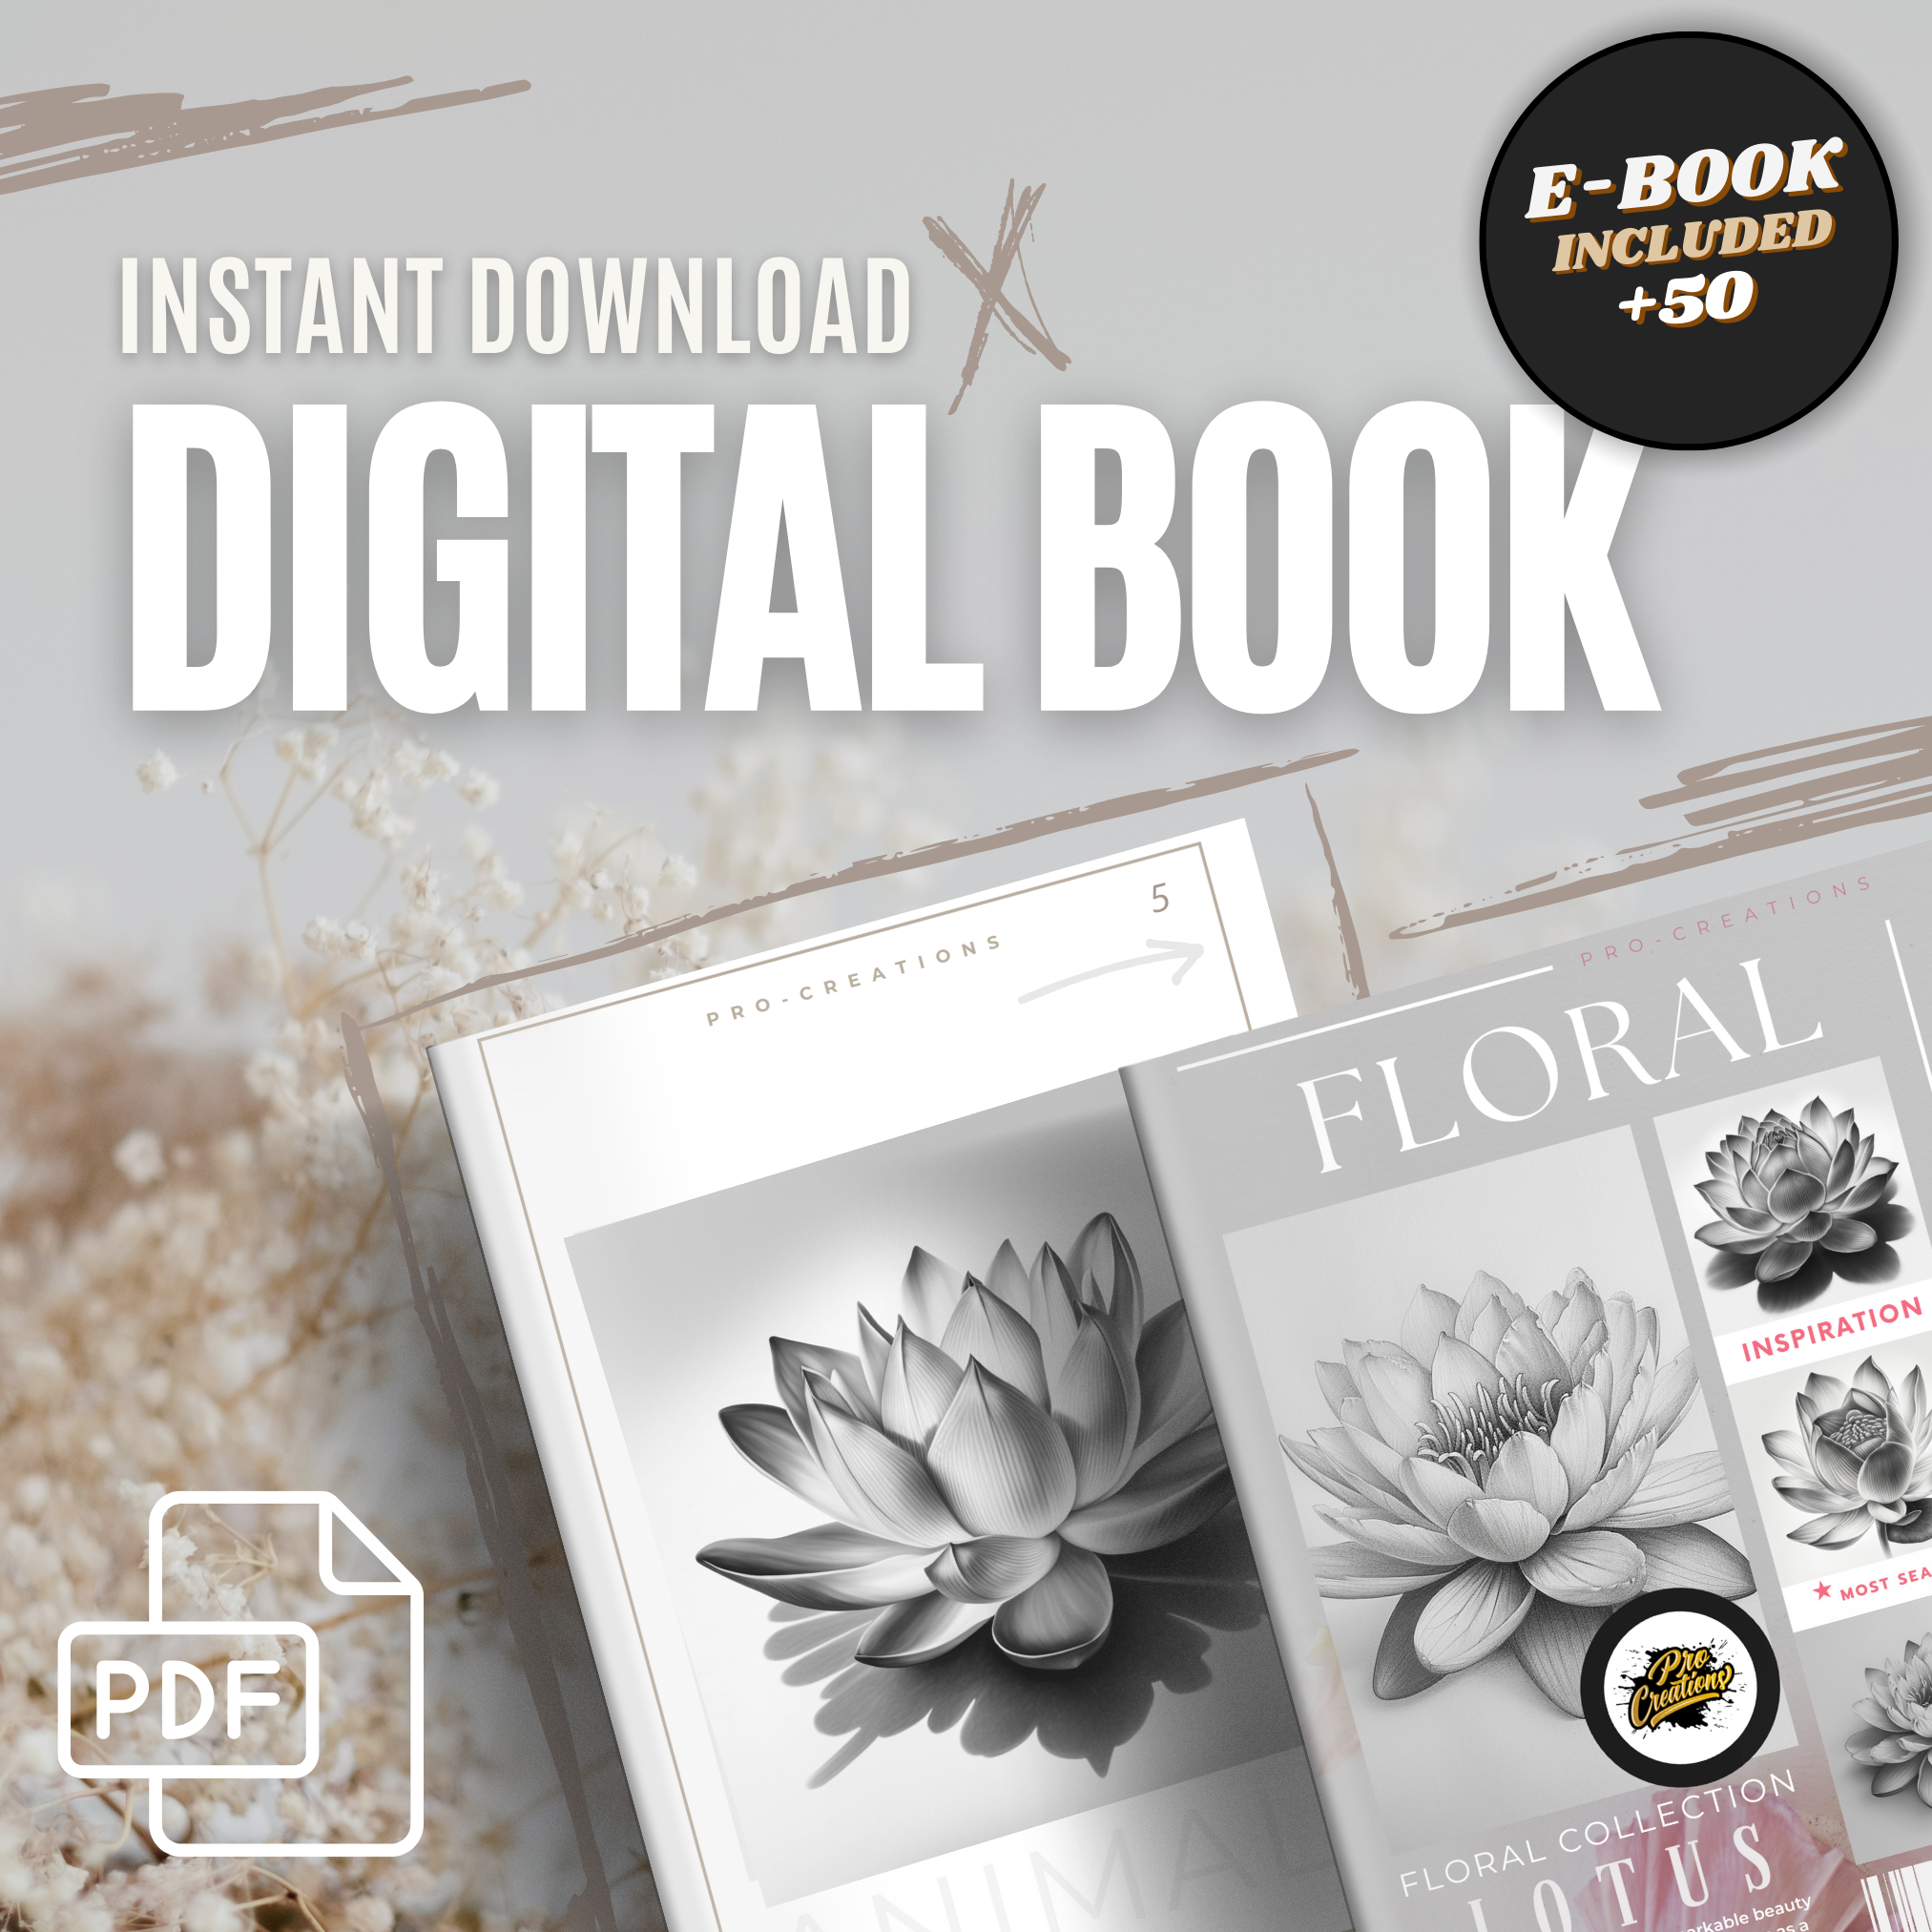 Lotus Flowers Digital Design Collection: 50 Procreate & Sketchbook Images